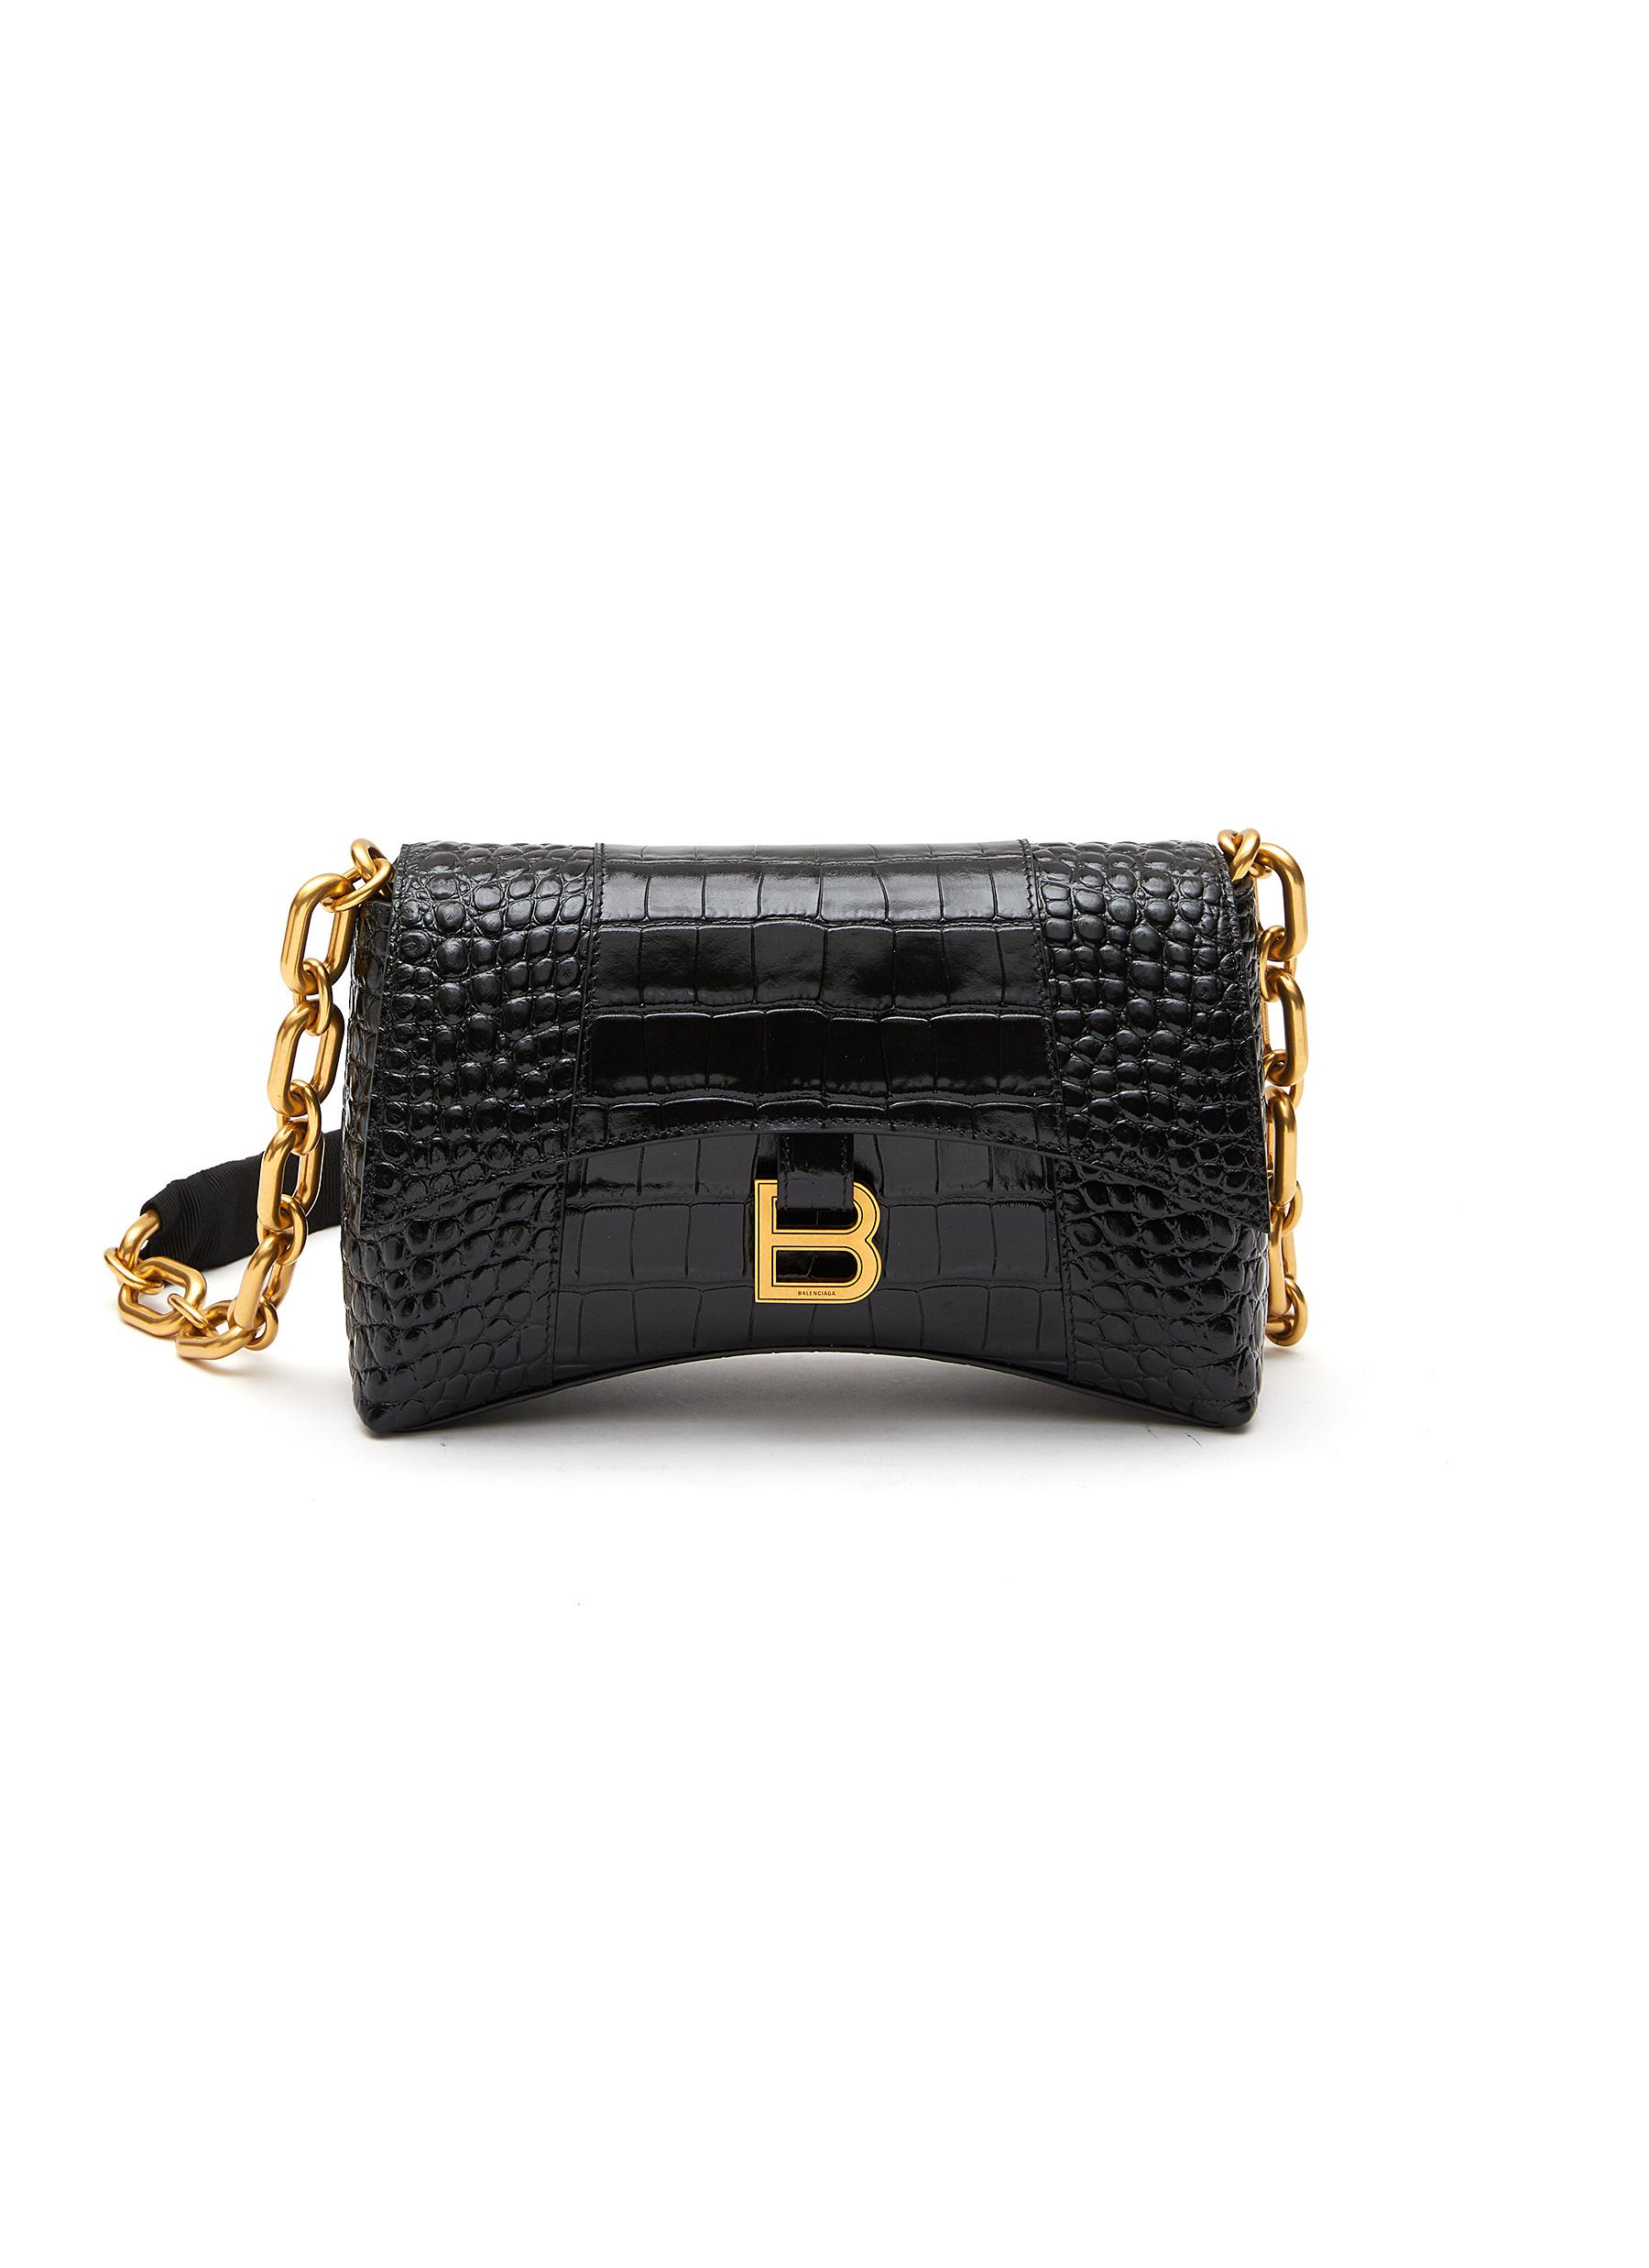 NWT Balenciaga Gossip Embossed Crocodile Shoulder Bag, Leather